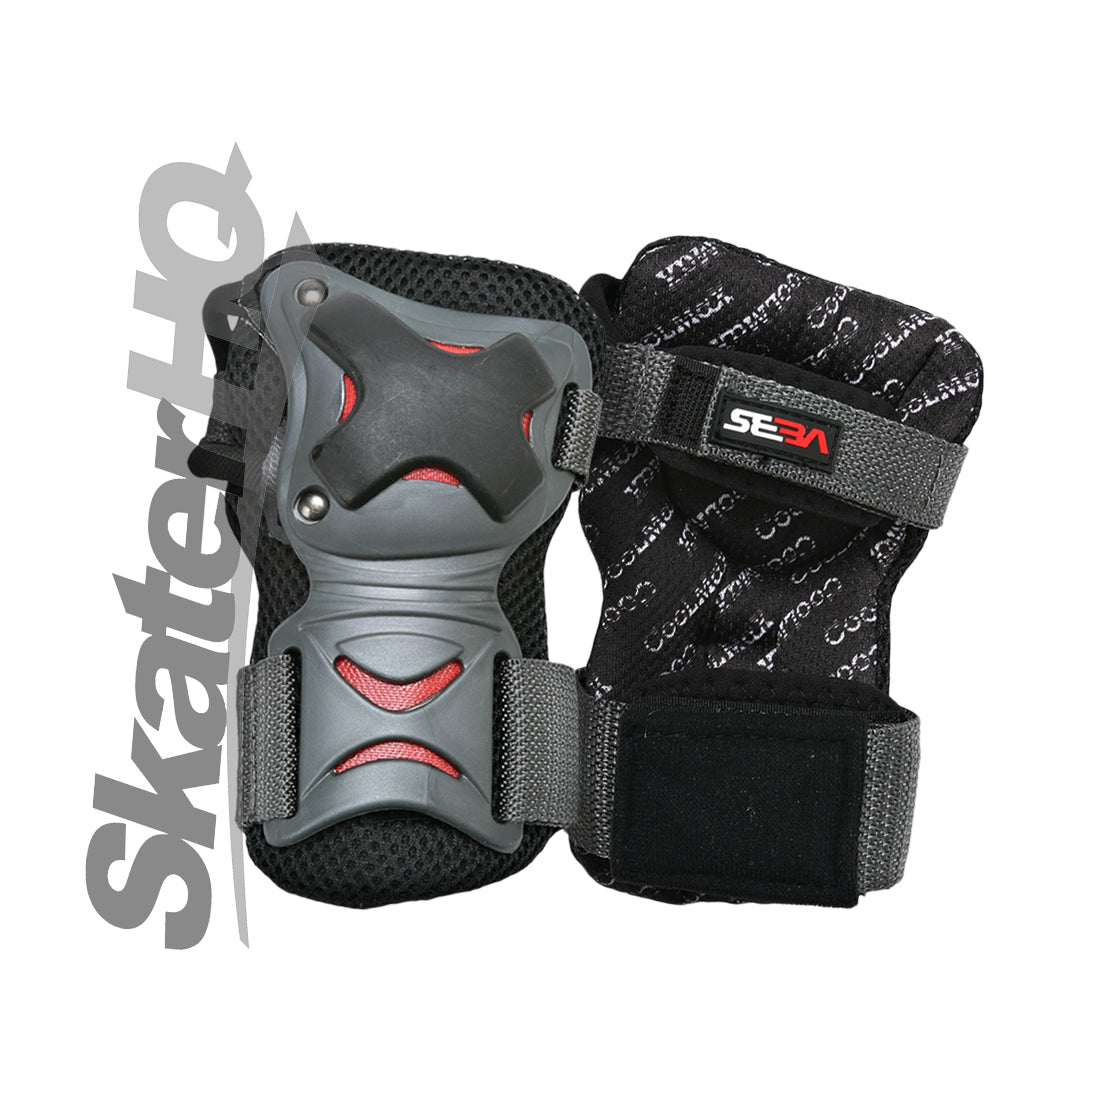 Seba Wrist Guards - XLarge Protective Gear